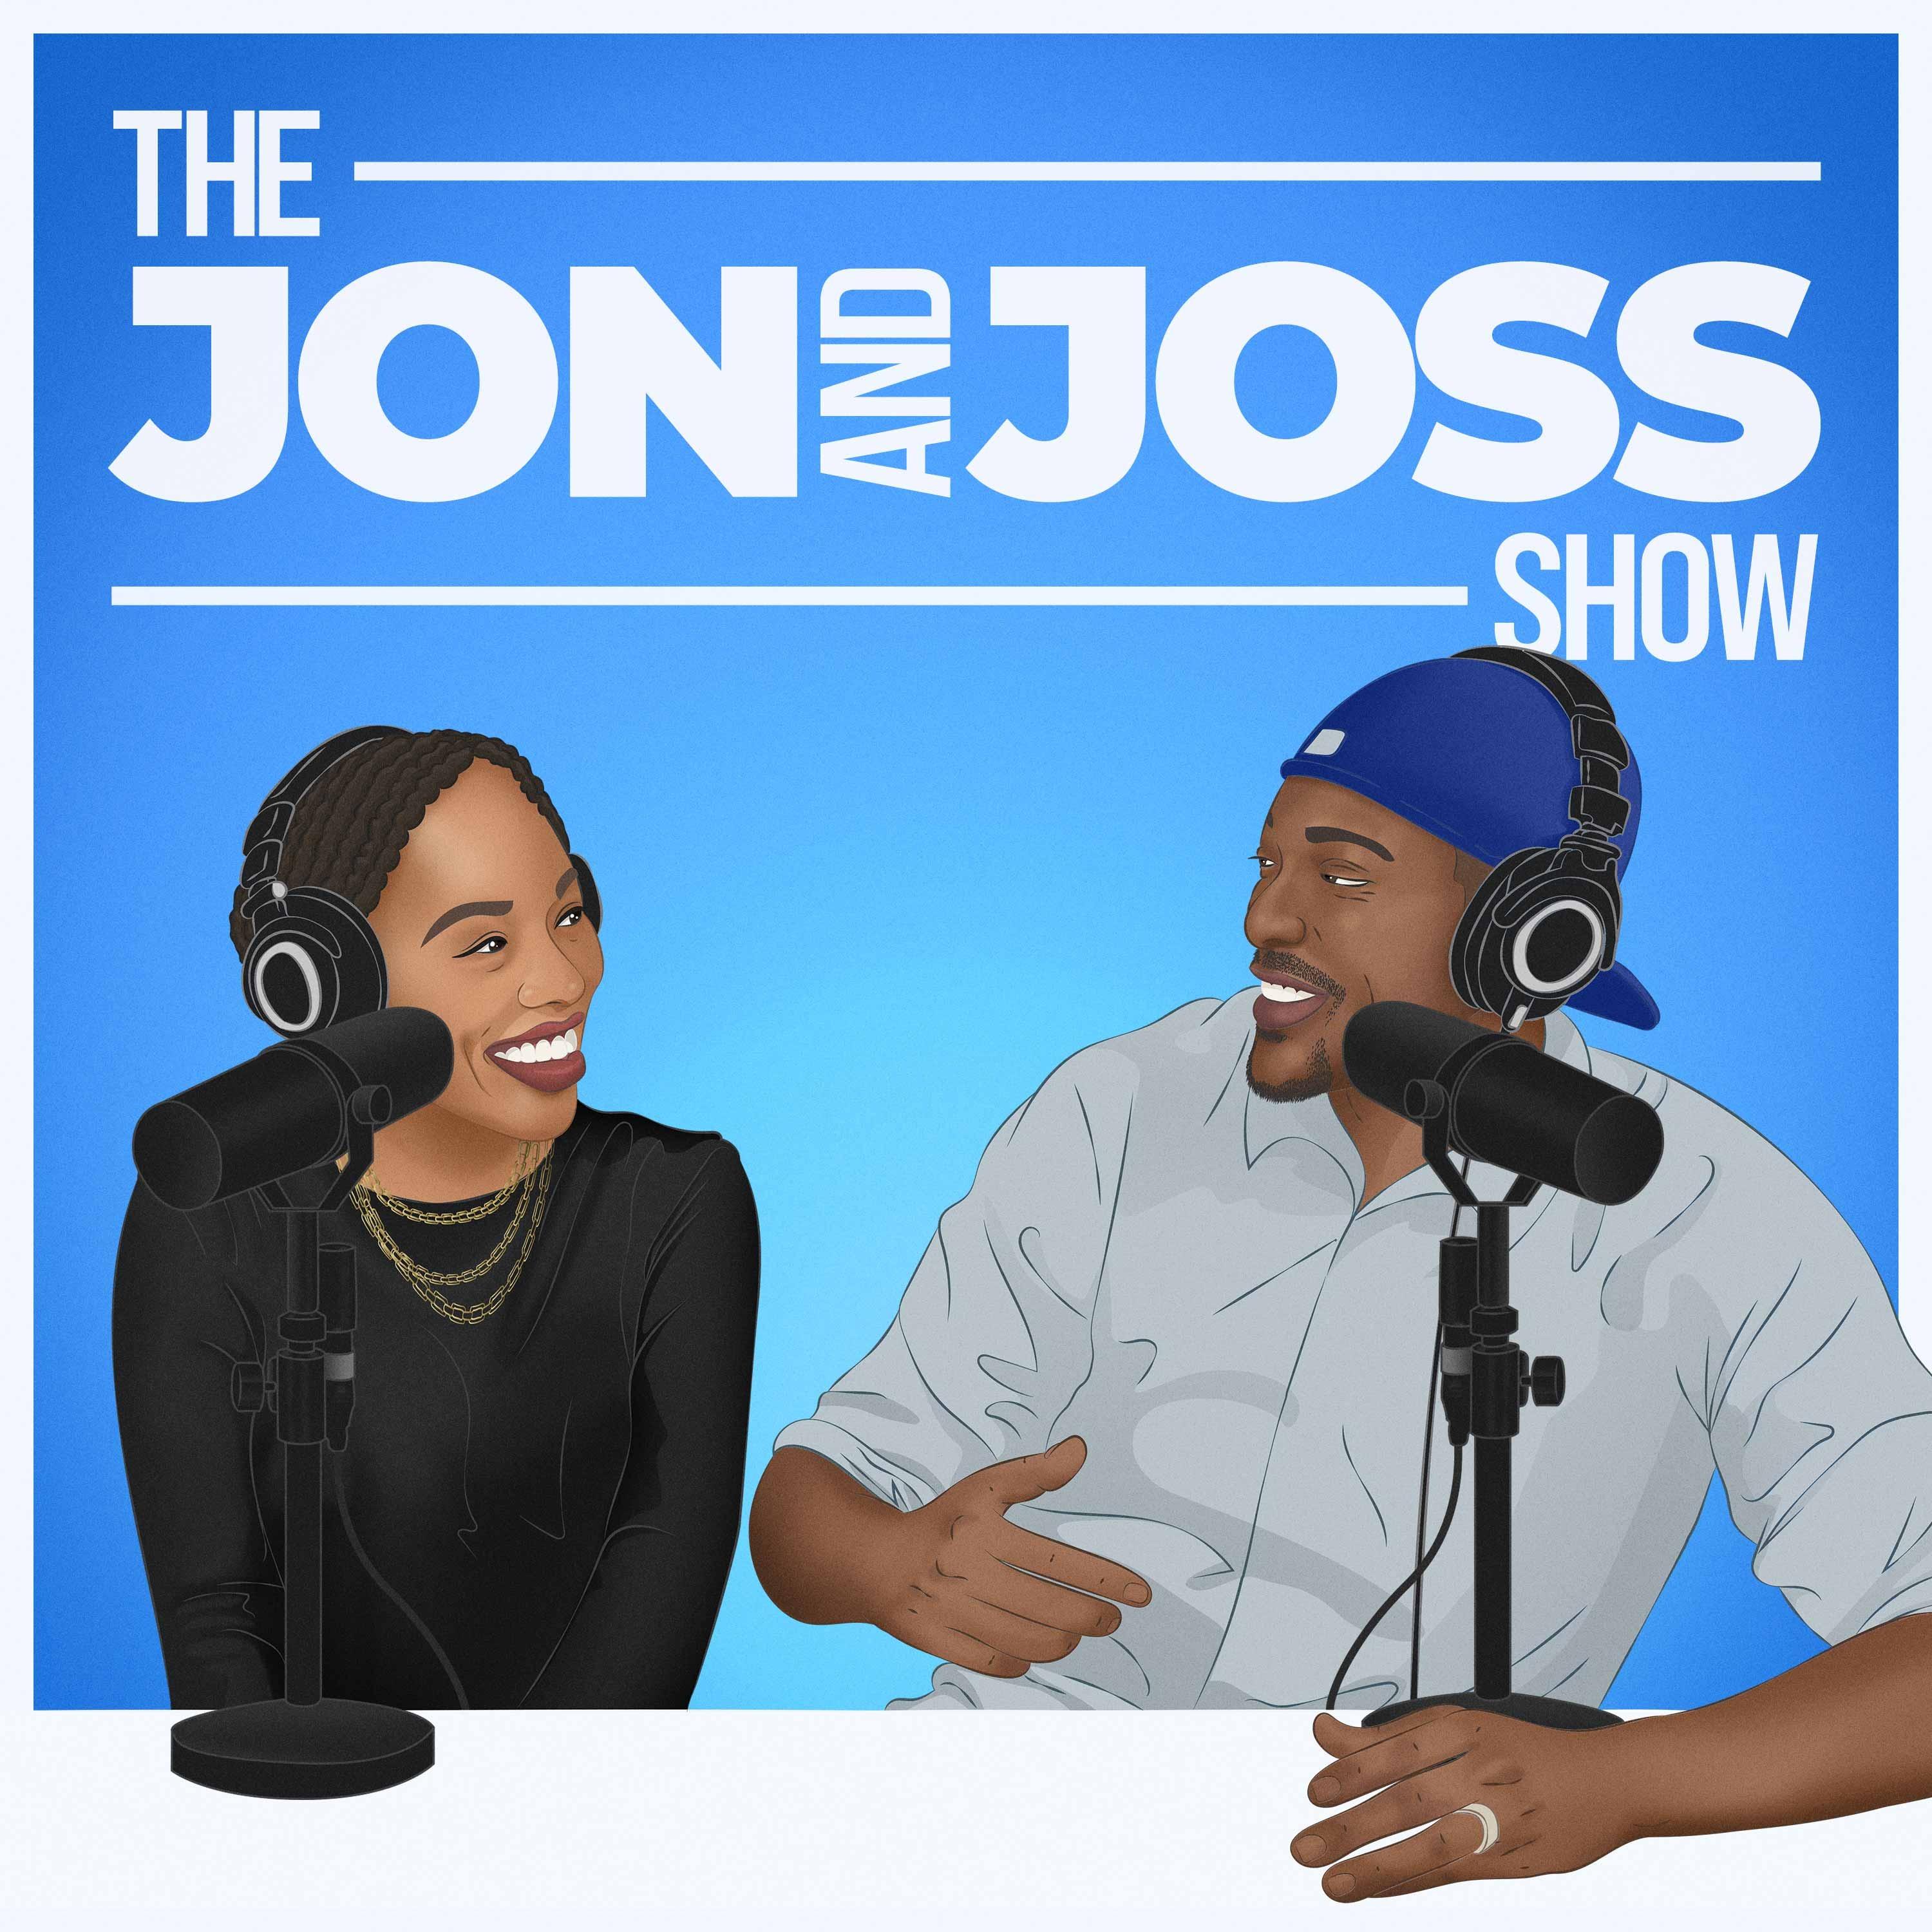 The Jon and Joss Show